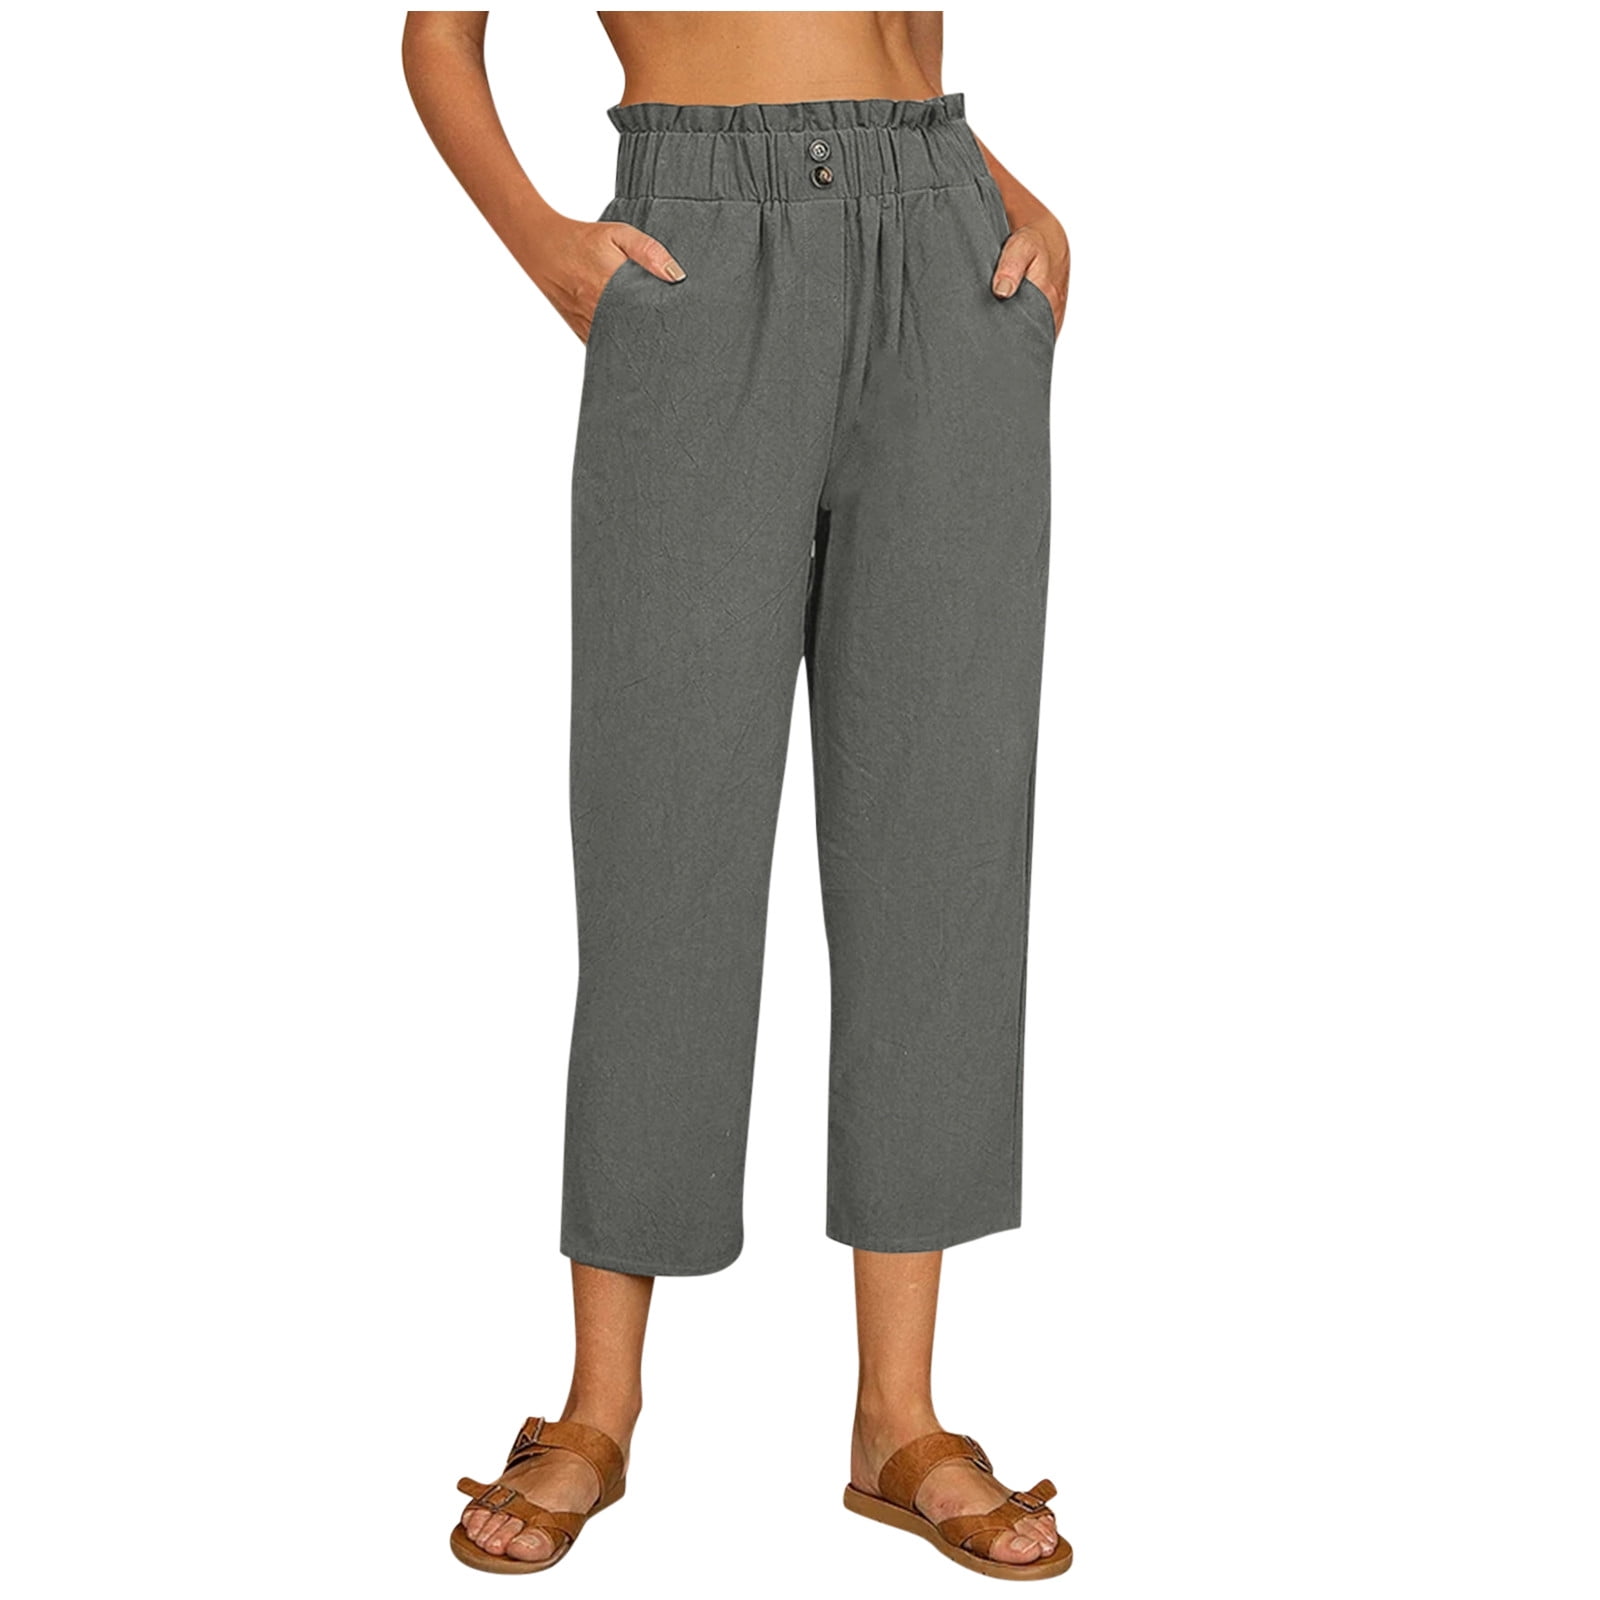 Frehsky pants for women Womens Casual Loose Pants Comfy Work Pants Pockets  Elastic High Waist Pants Grey